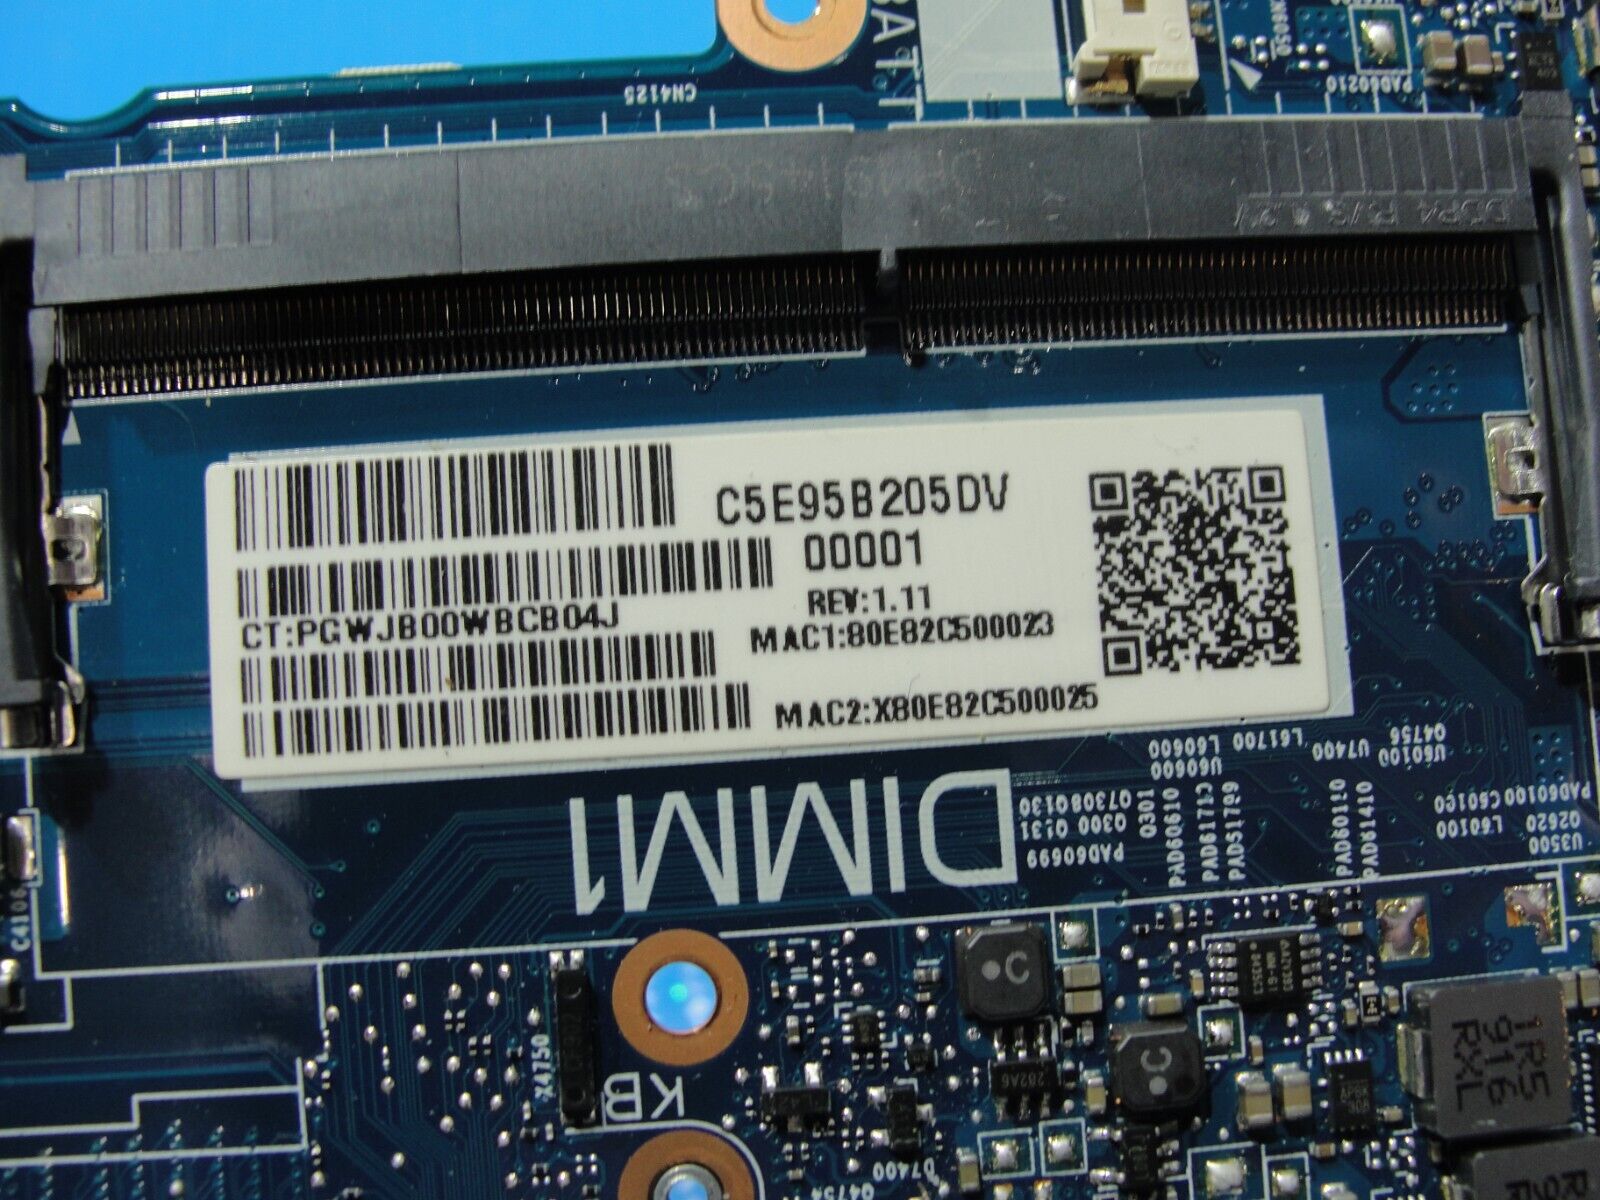 HP EliteBook 15.6” 850 G5 Genuine Laptop i7-8650U 1.9GHz Motherboard L15522-601